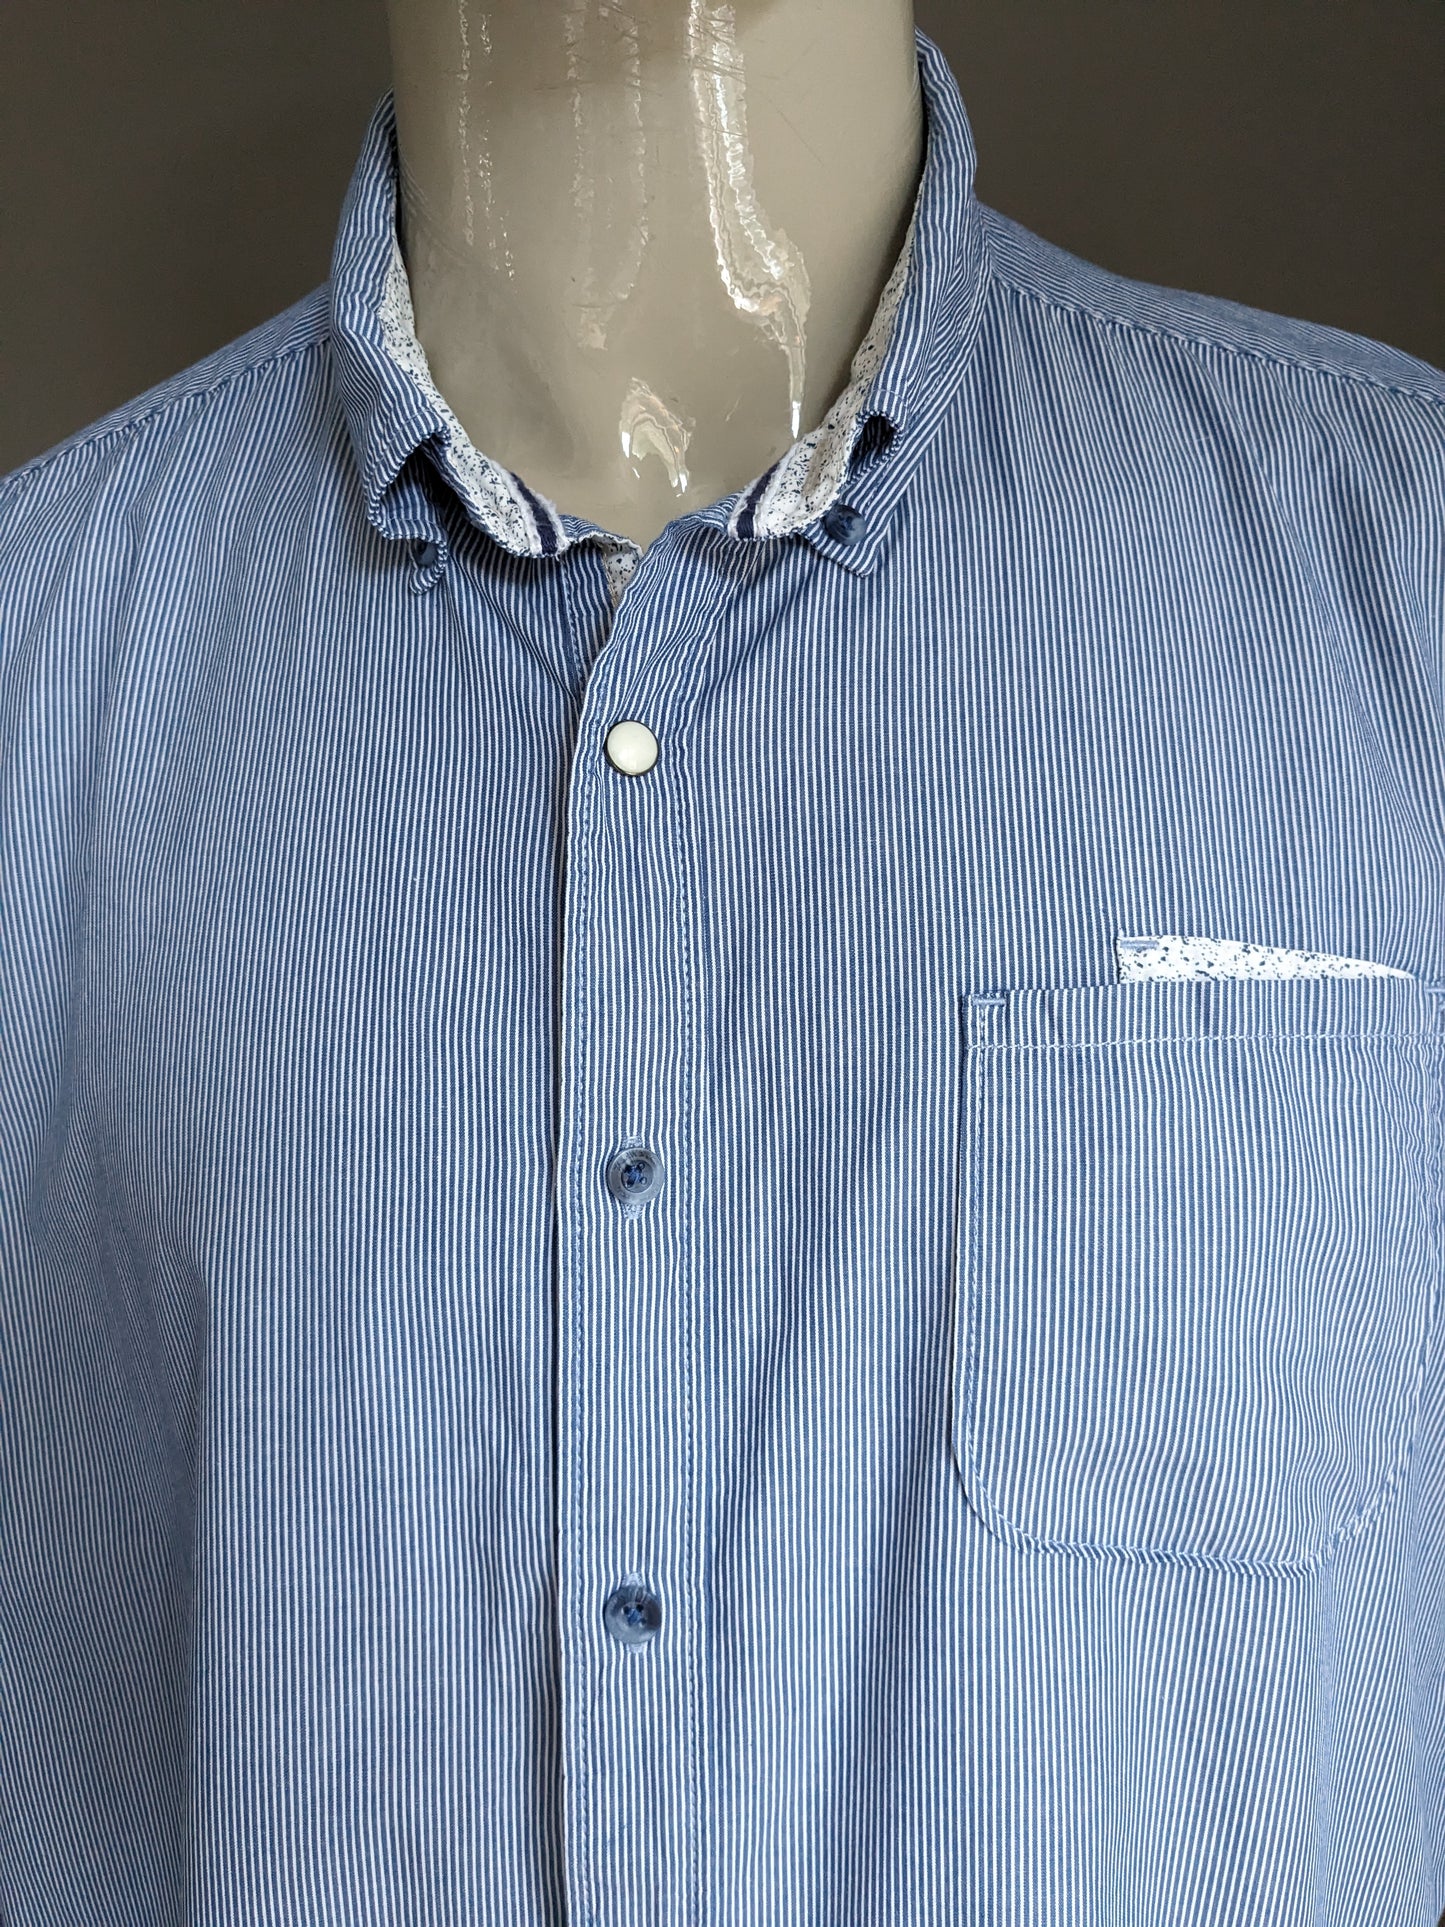 Tailor & Son overhemd. Blauw Wit gestreept. Maat 3XL / XXXL.